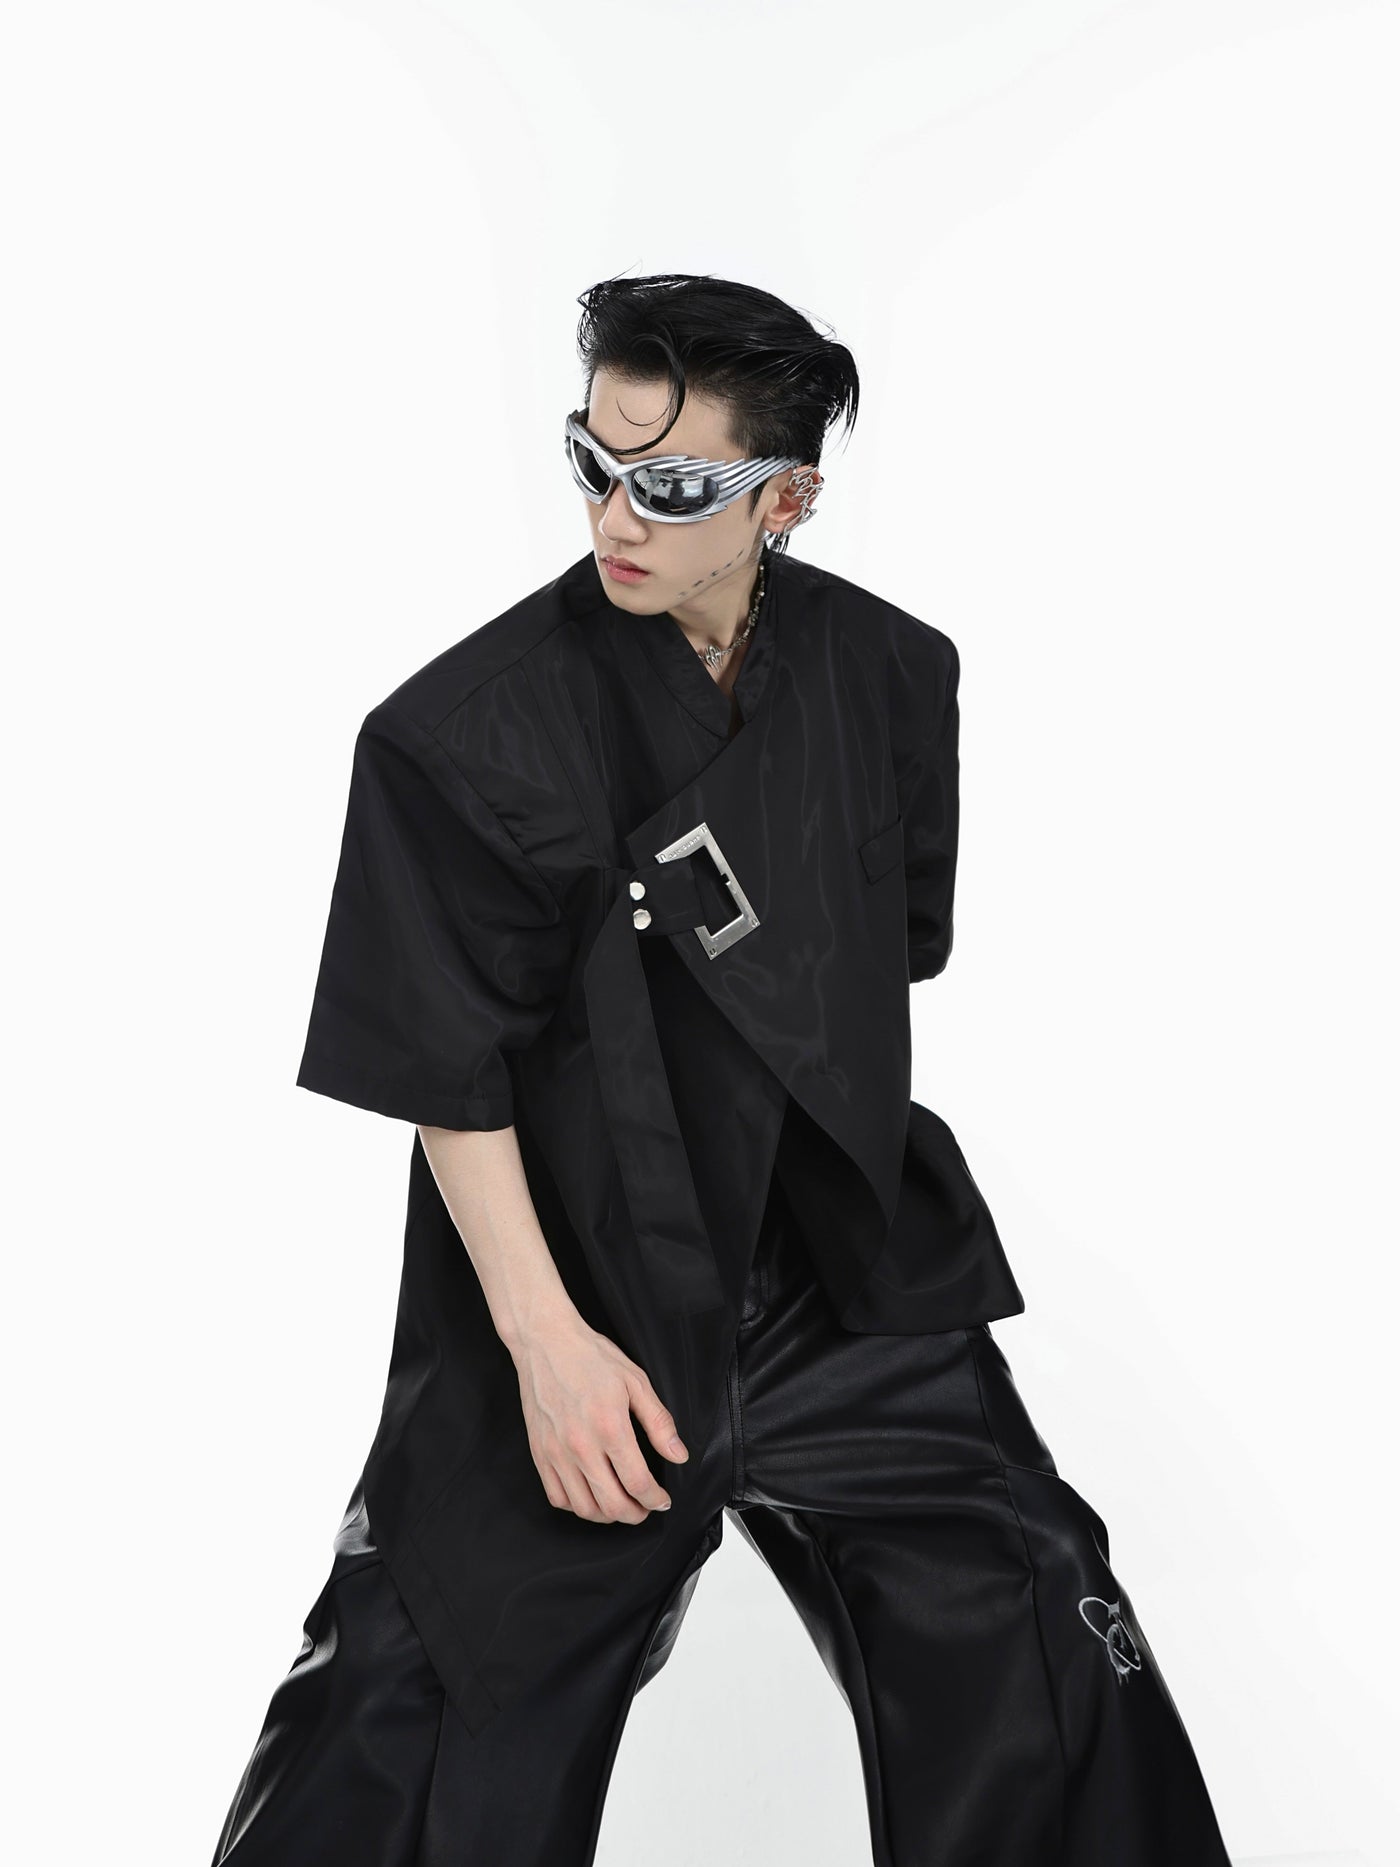 Rectangle Strap Lace Shirt Korean Street Fashion Shirt By Argue Culture Shop Online at OH Vault